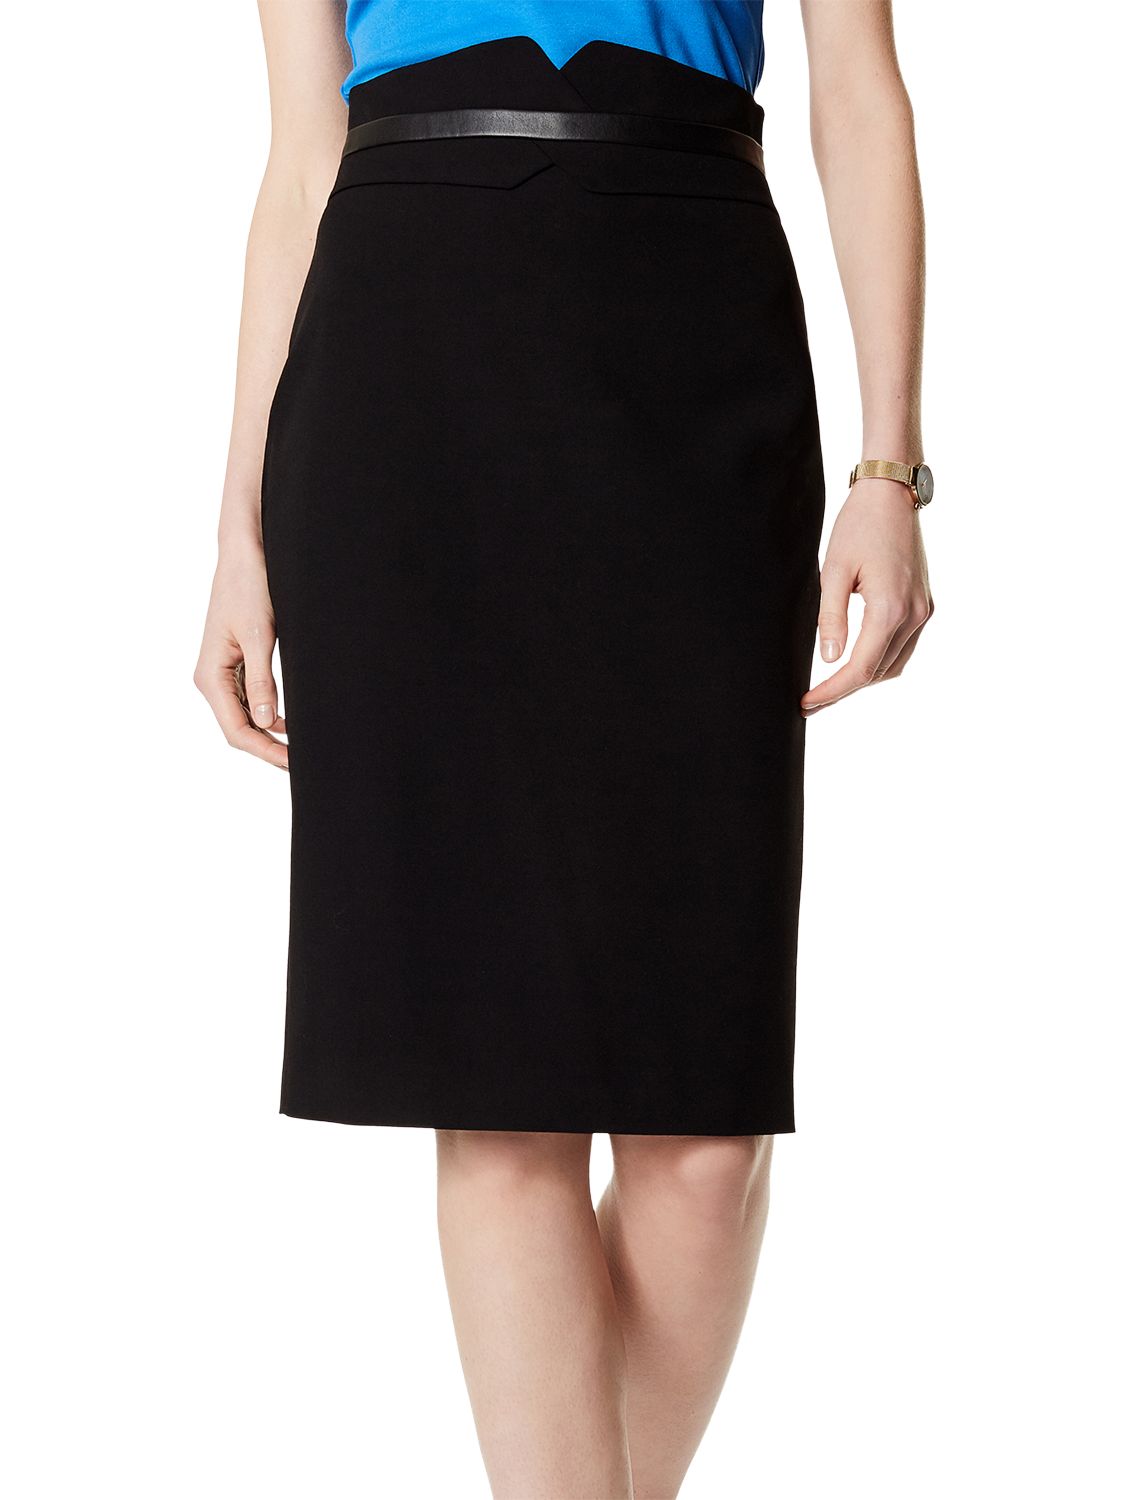 Karen Millen Tailoring Collection Skirt, Black